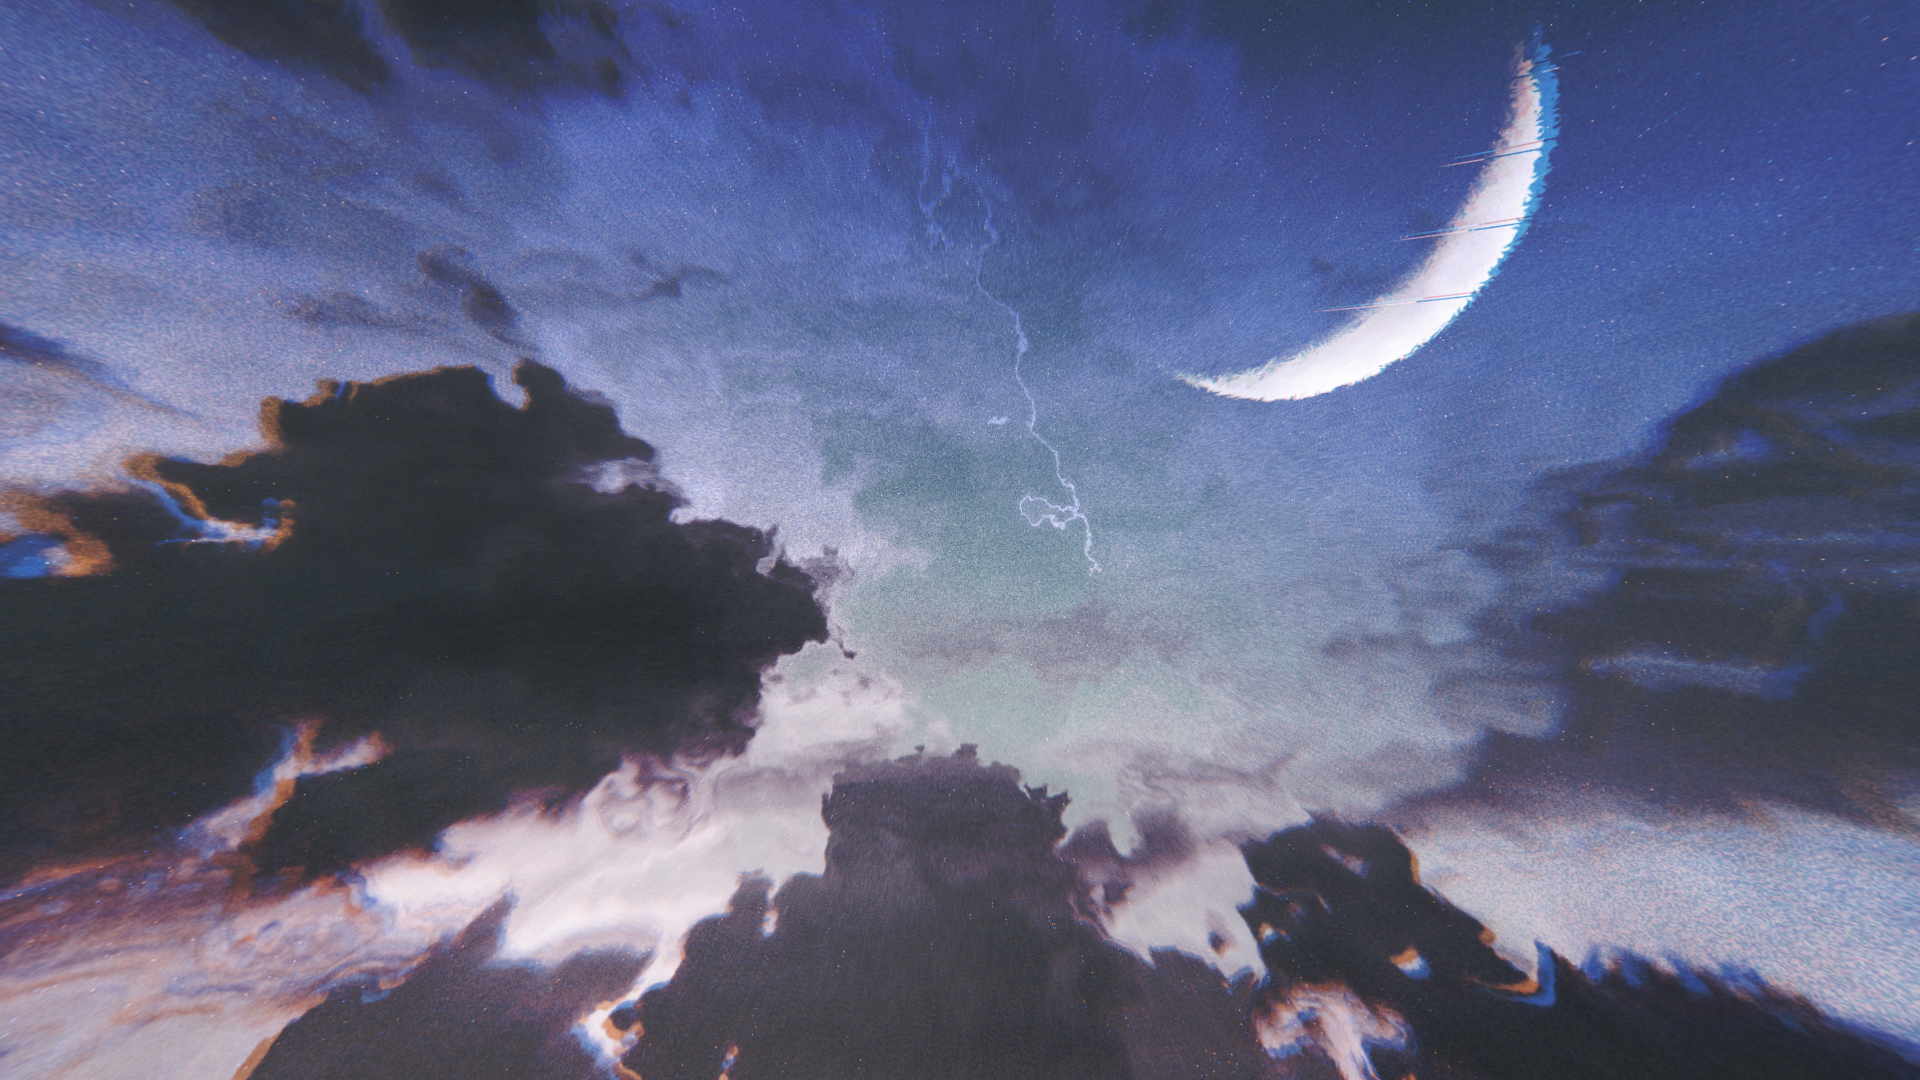 General 1920x1080 Moon glitch art clouds digital art chromatic aberration sky crescent moon artwork night blue